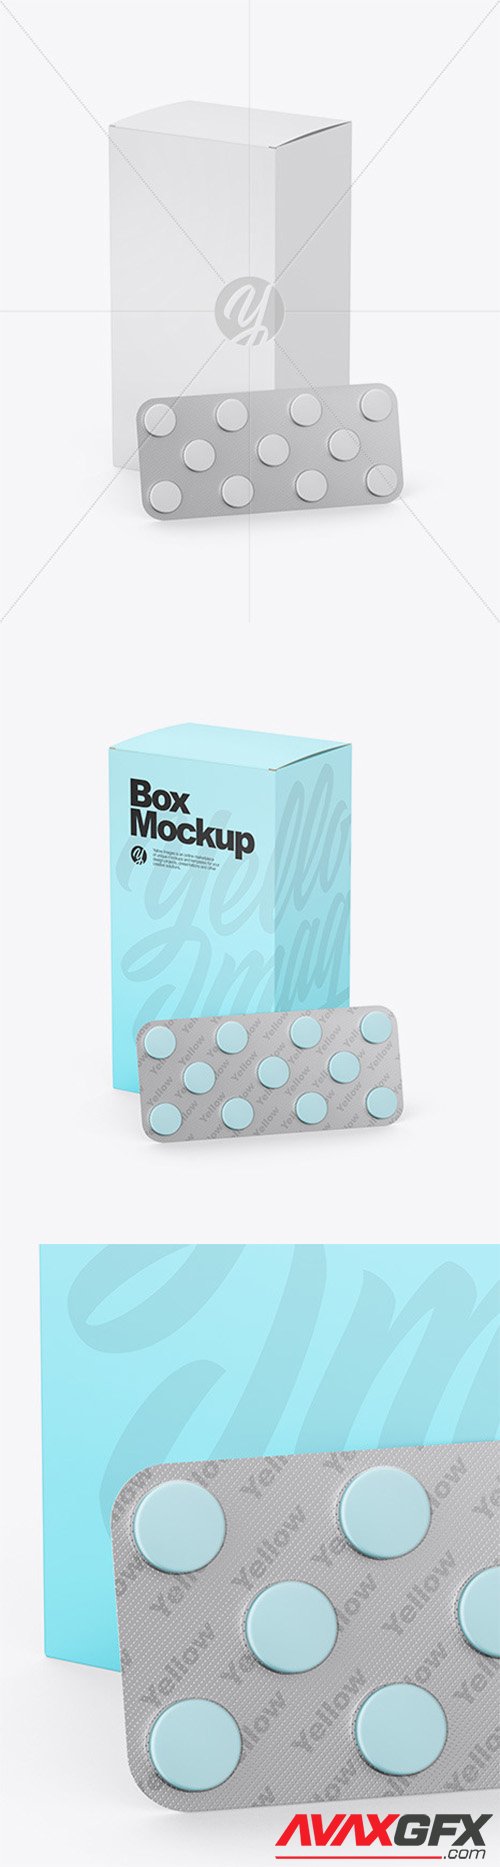 Paper Box W/ Blister Pack Mockup 78536 TIF